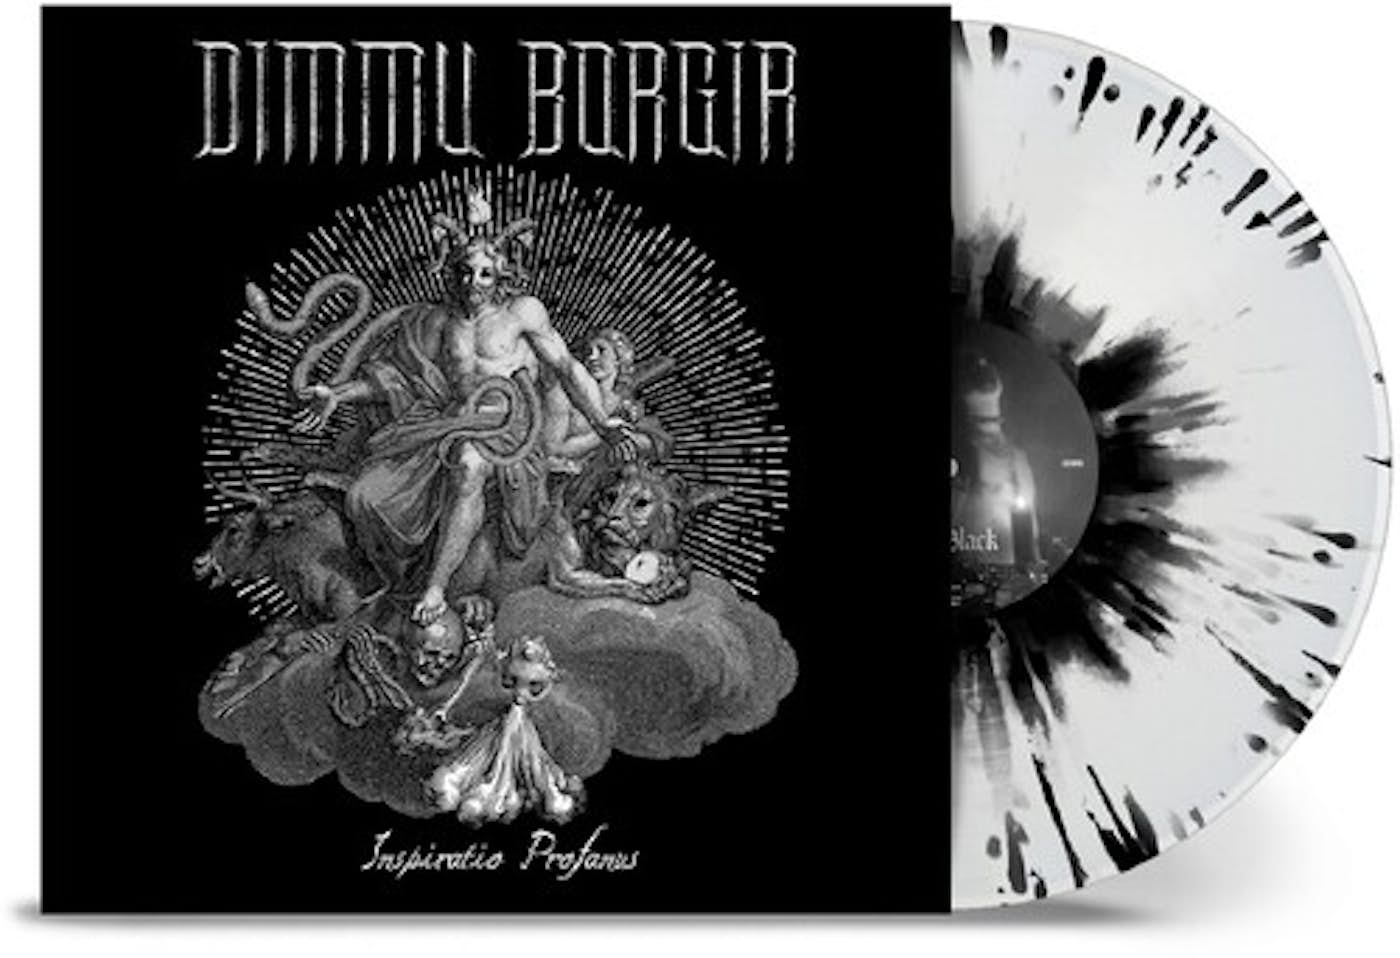 Dimmu Borgir - Official Biography — Dimmu Borgir